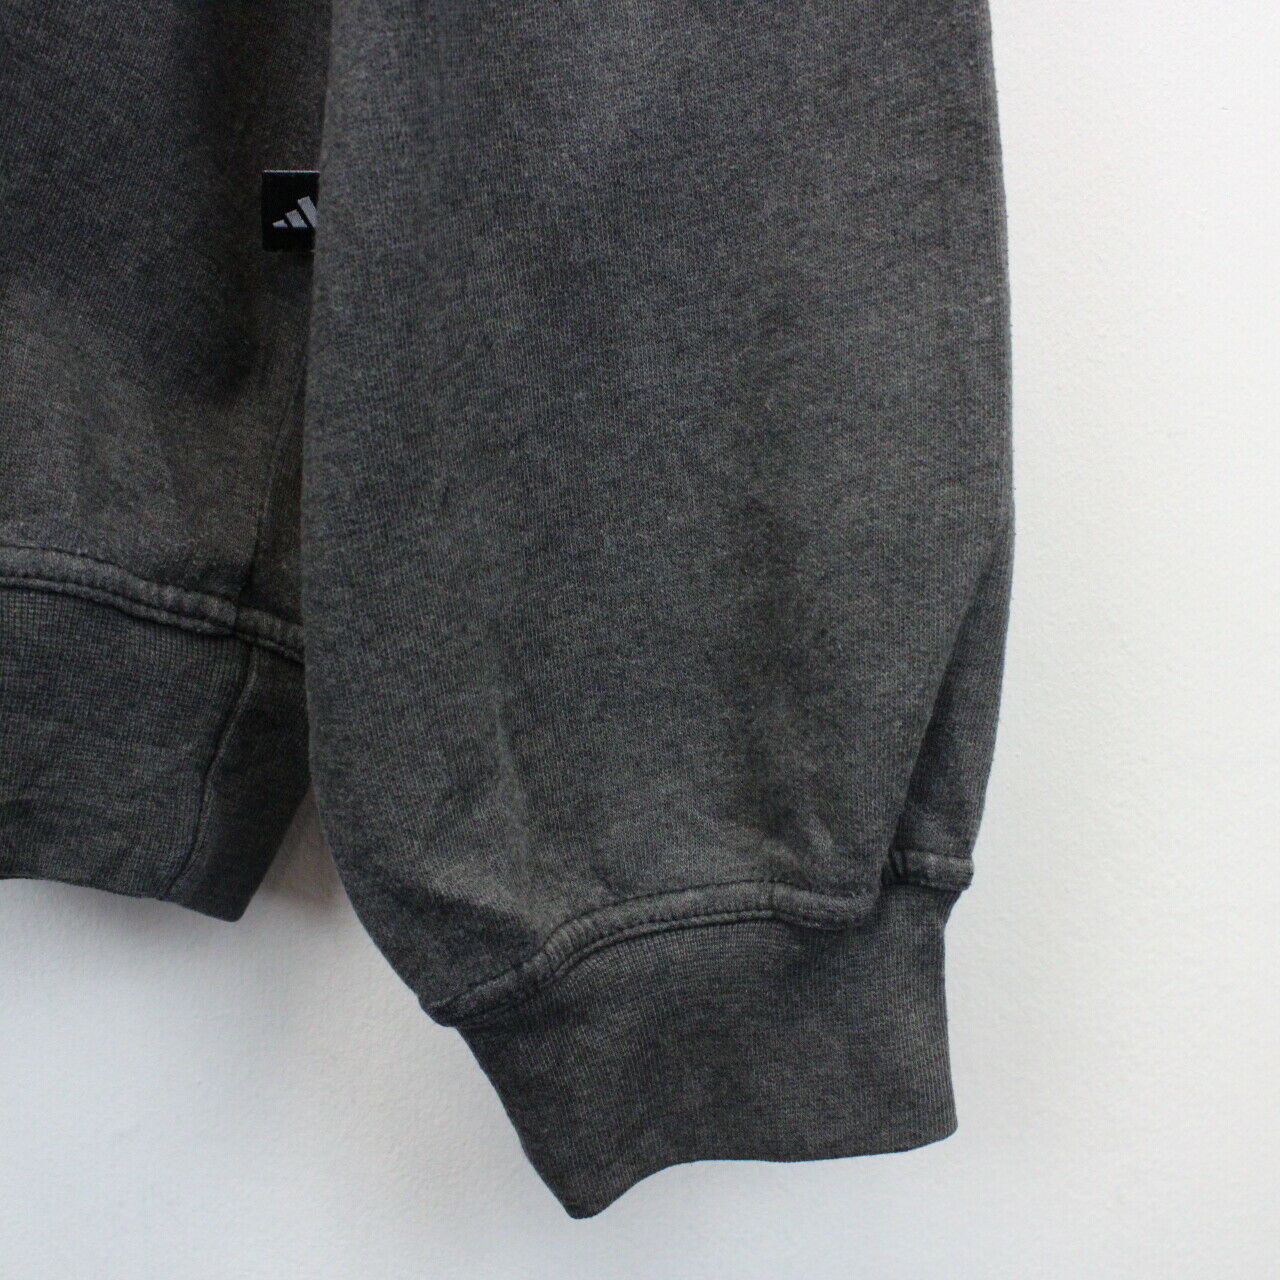 ADIDAS 90s Sweatshirt Grey | Large